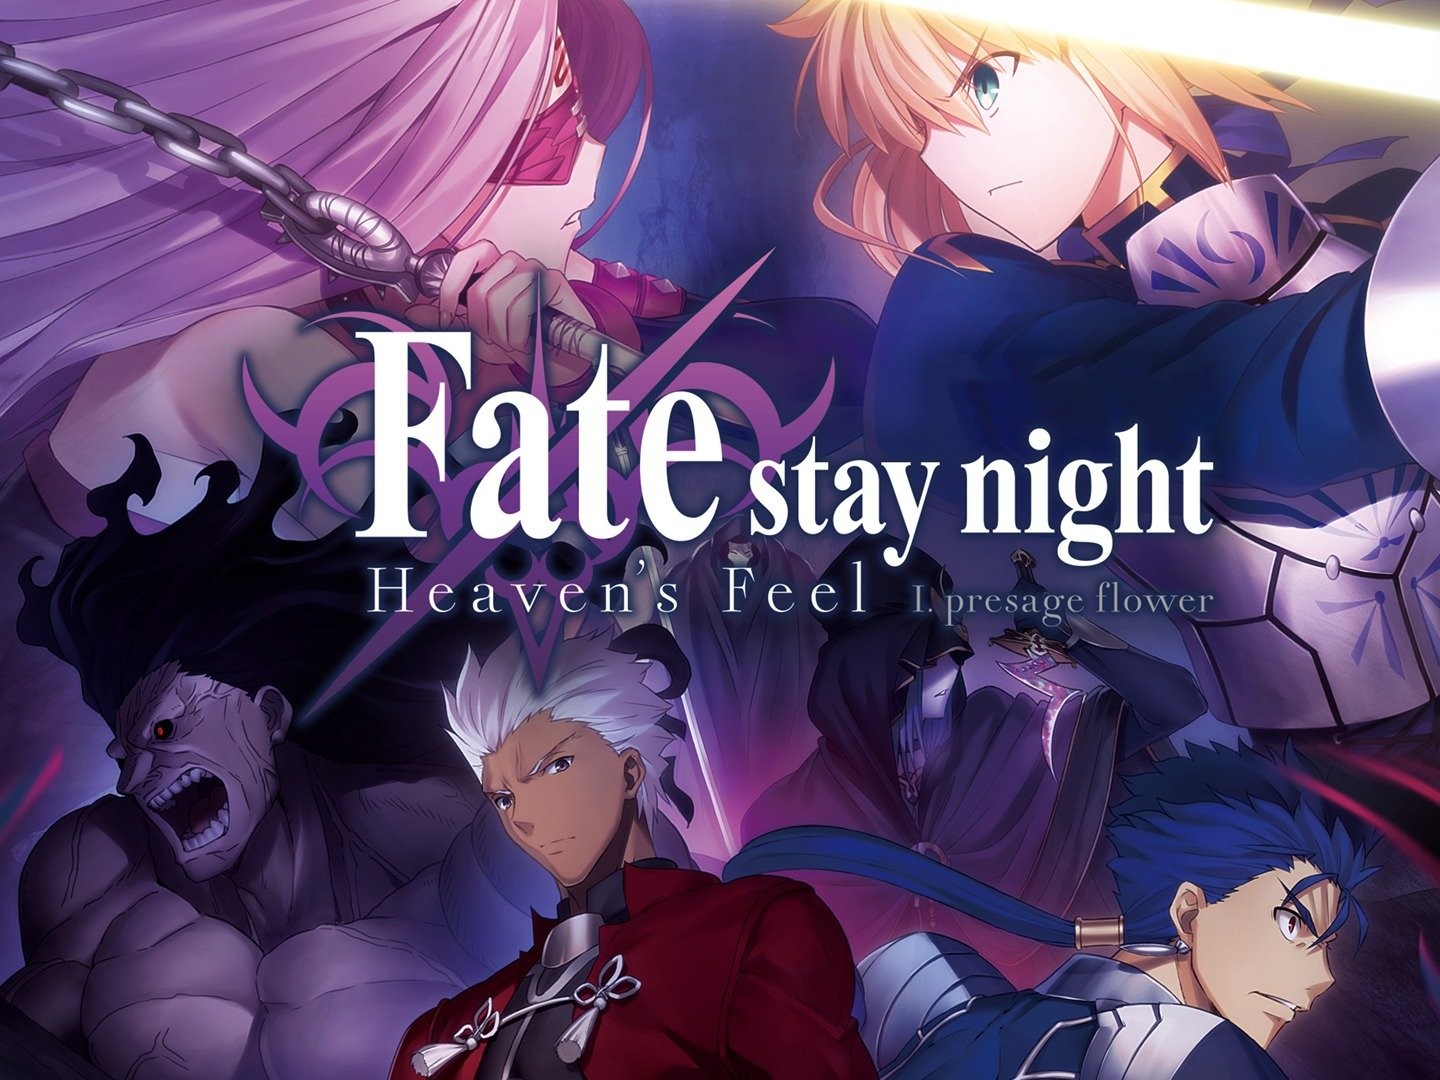 Fate/stay night - “Fate/stay night: Heaven's Feel I. presage